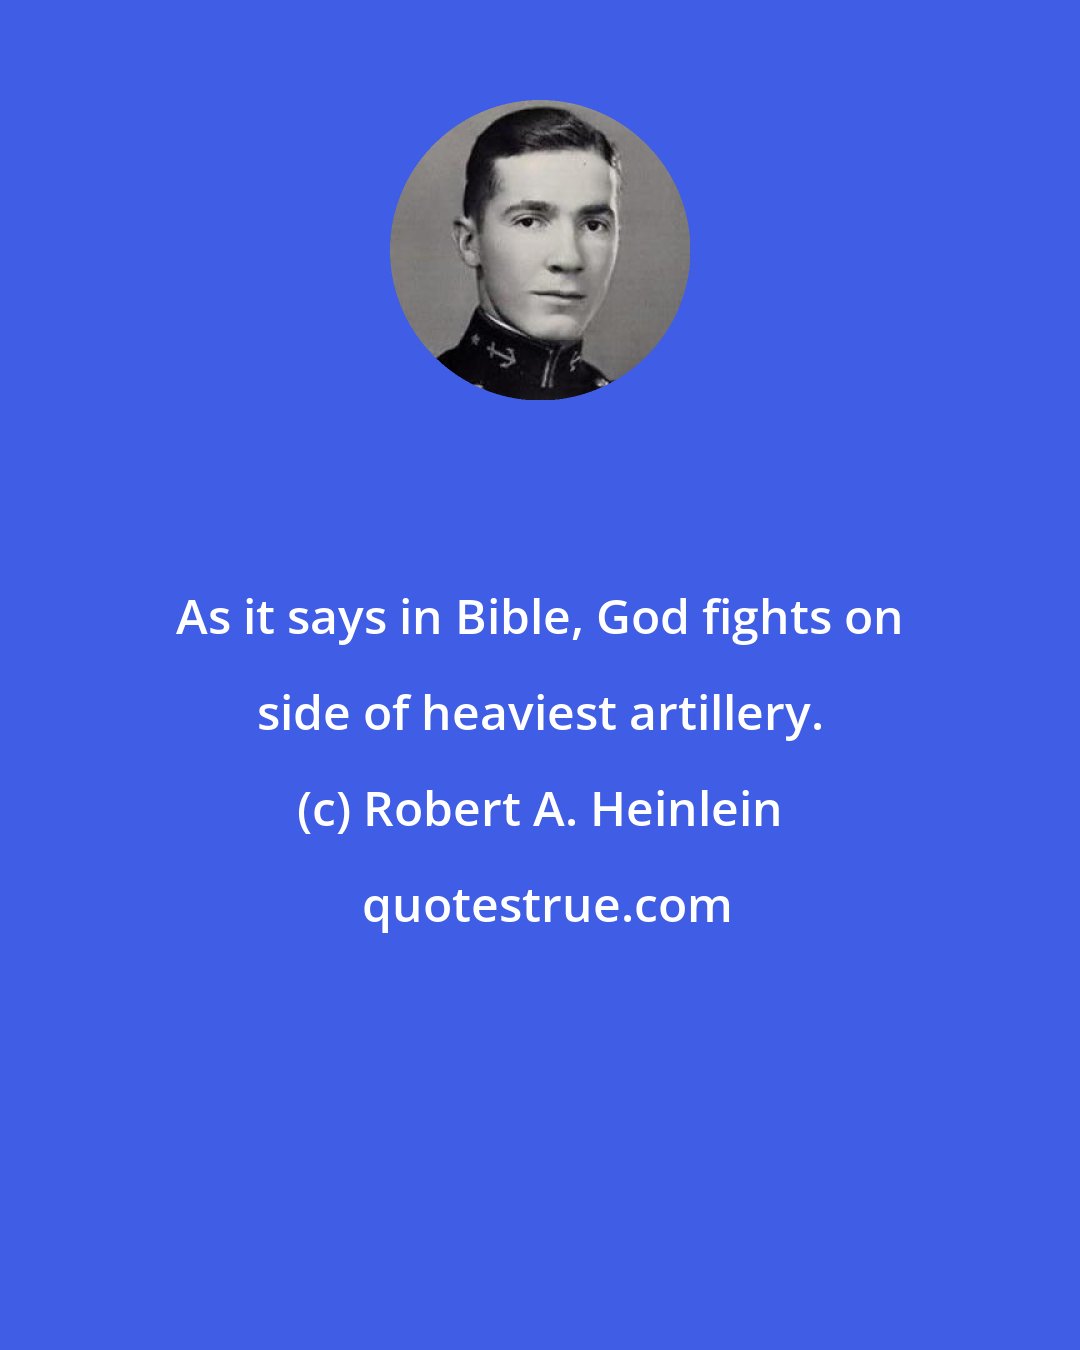 Robert A. Heinlein: As it says in Bible, God fights on side of heaviest artillery.